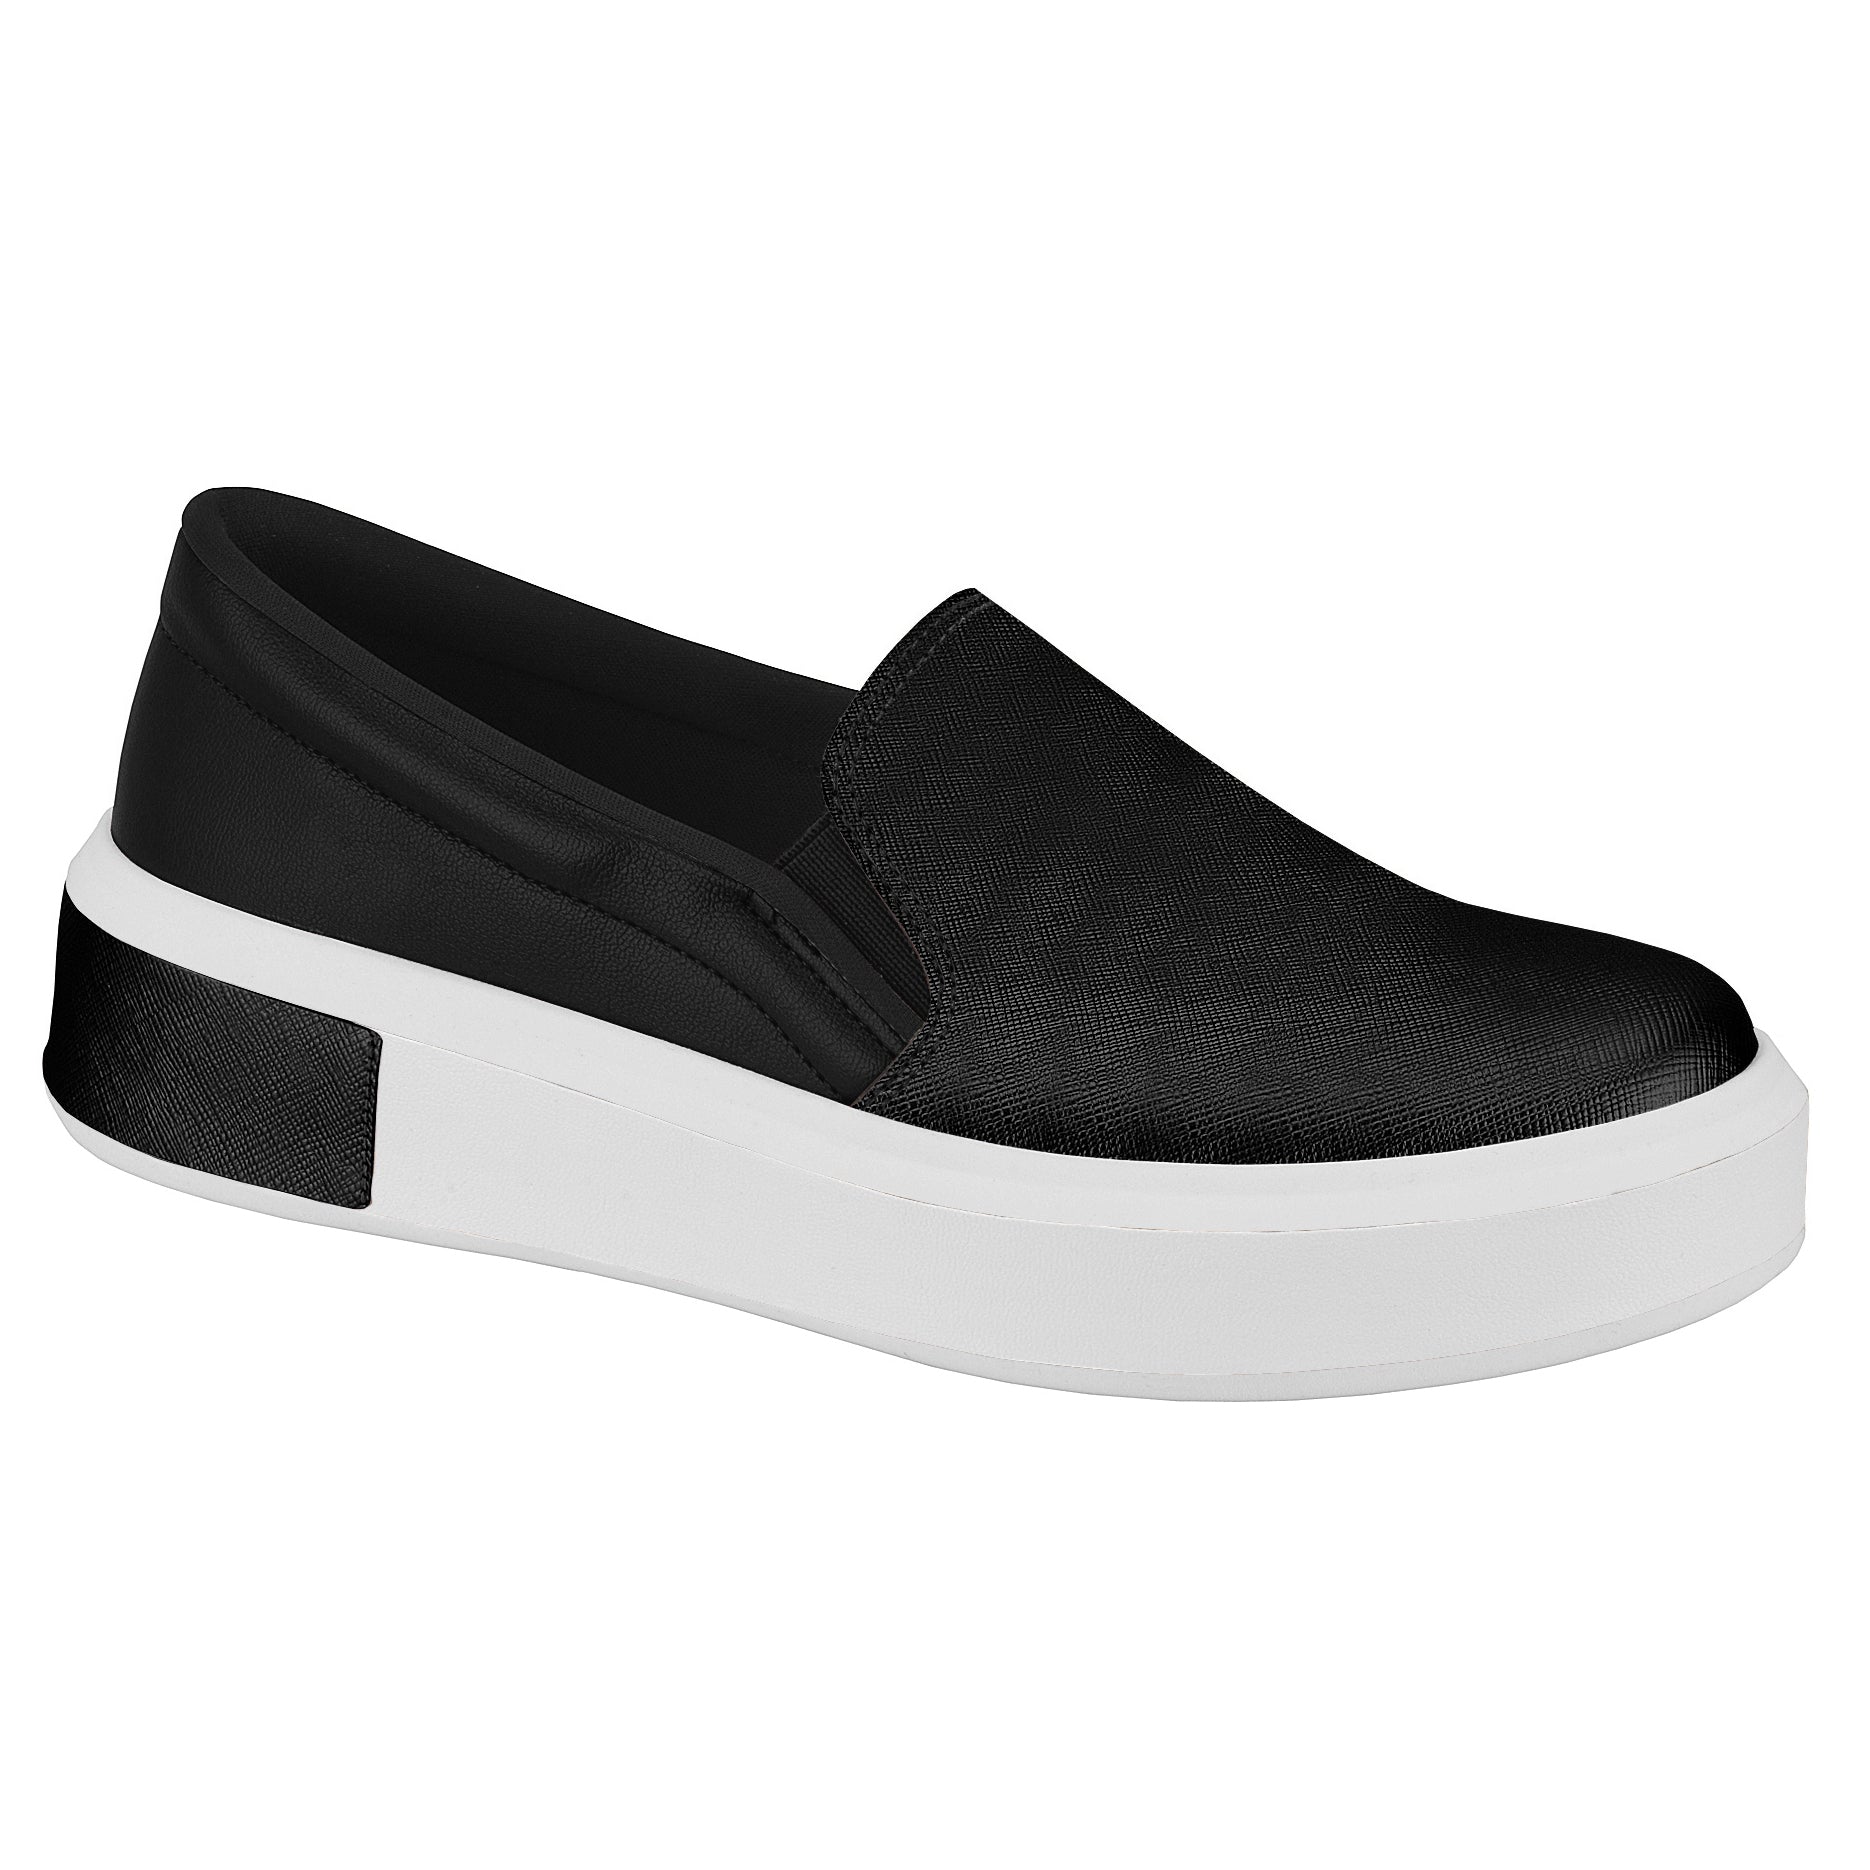 Beira Rio 4252-200 Slip-on Sneaker in Black